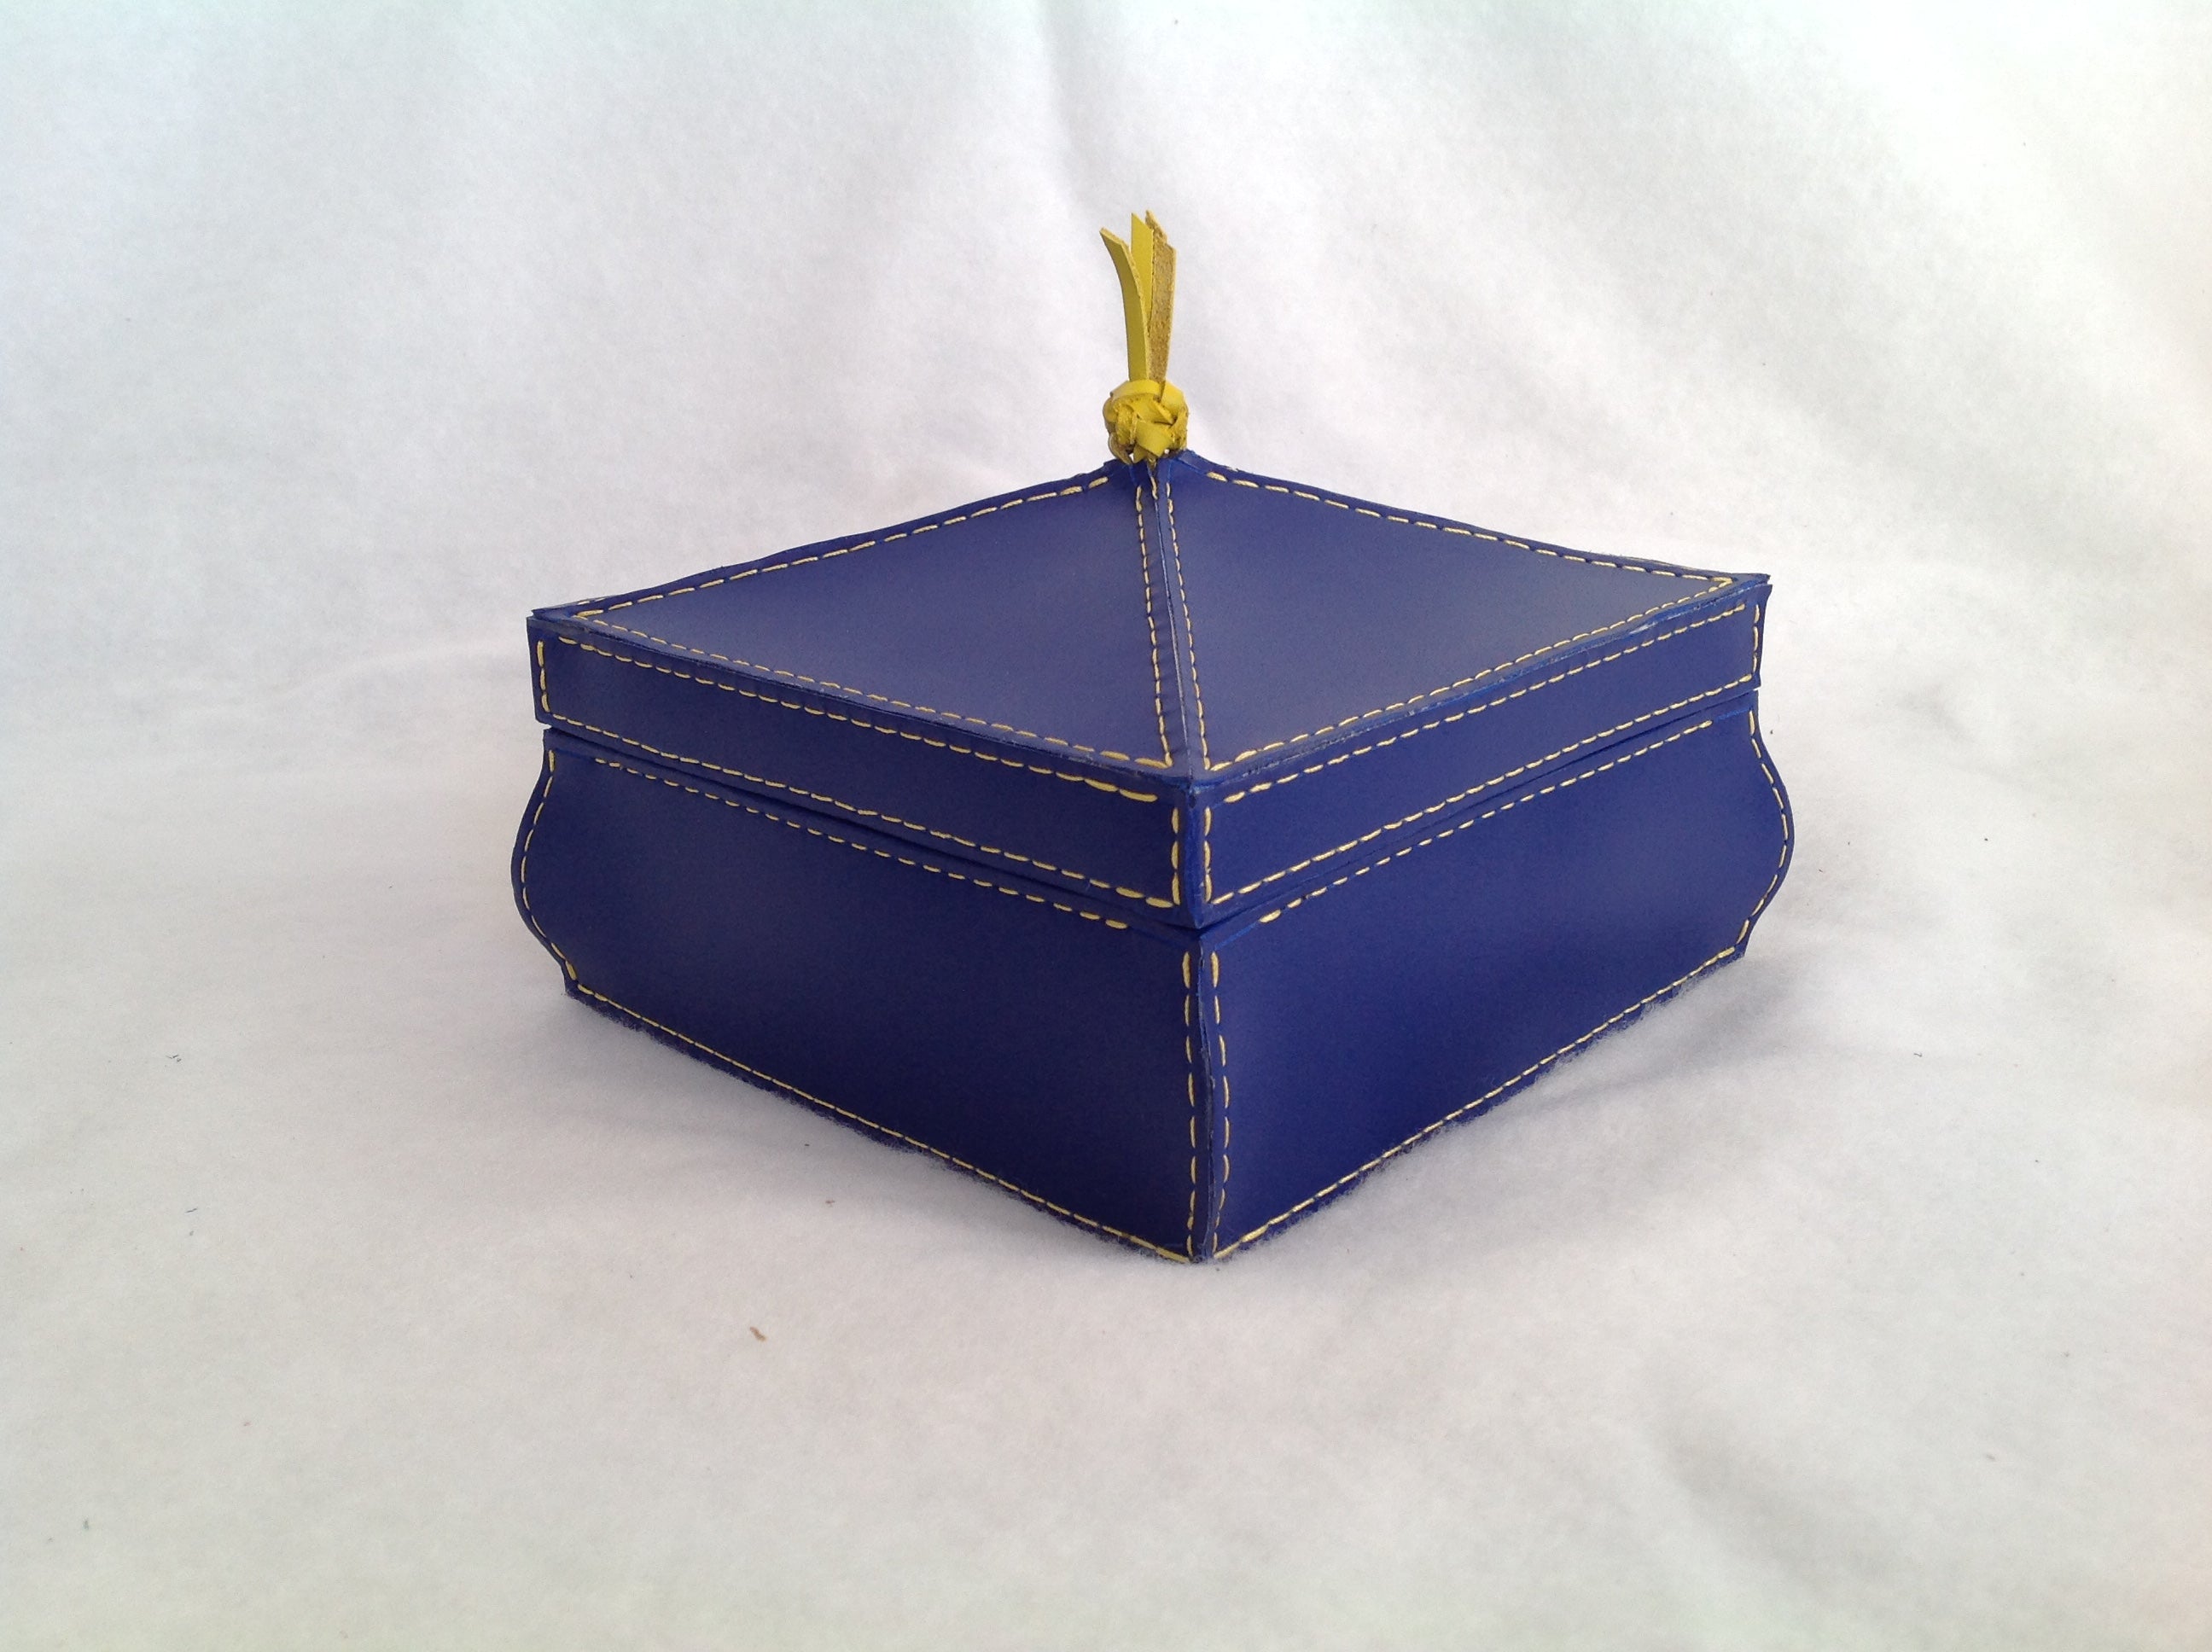 Tool Box in Blue Latigo Leather